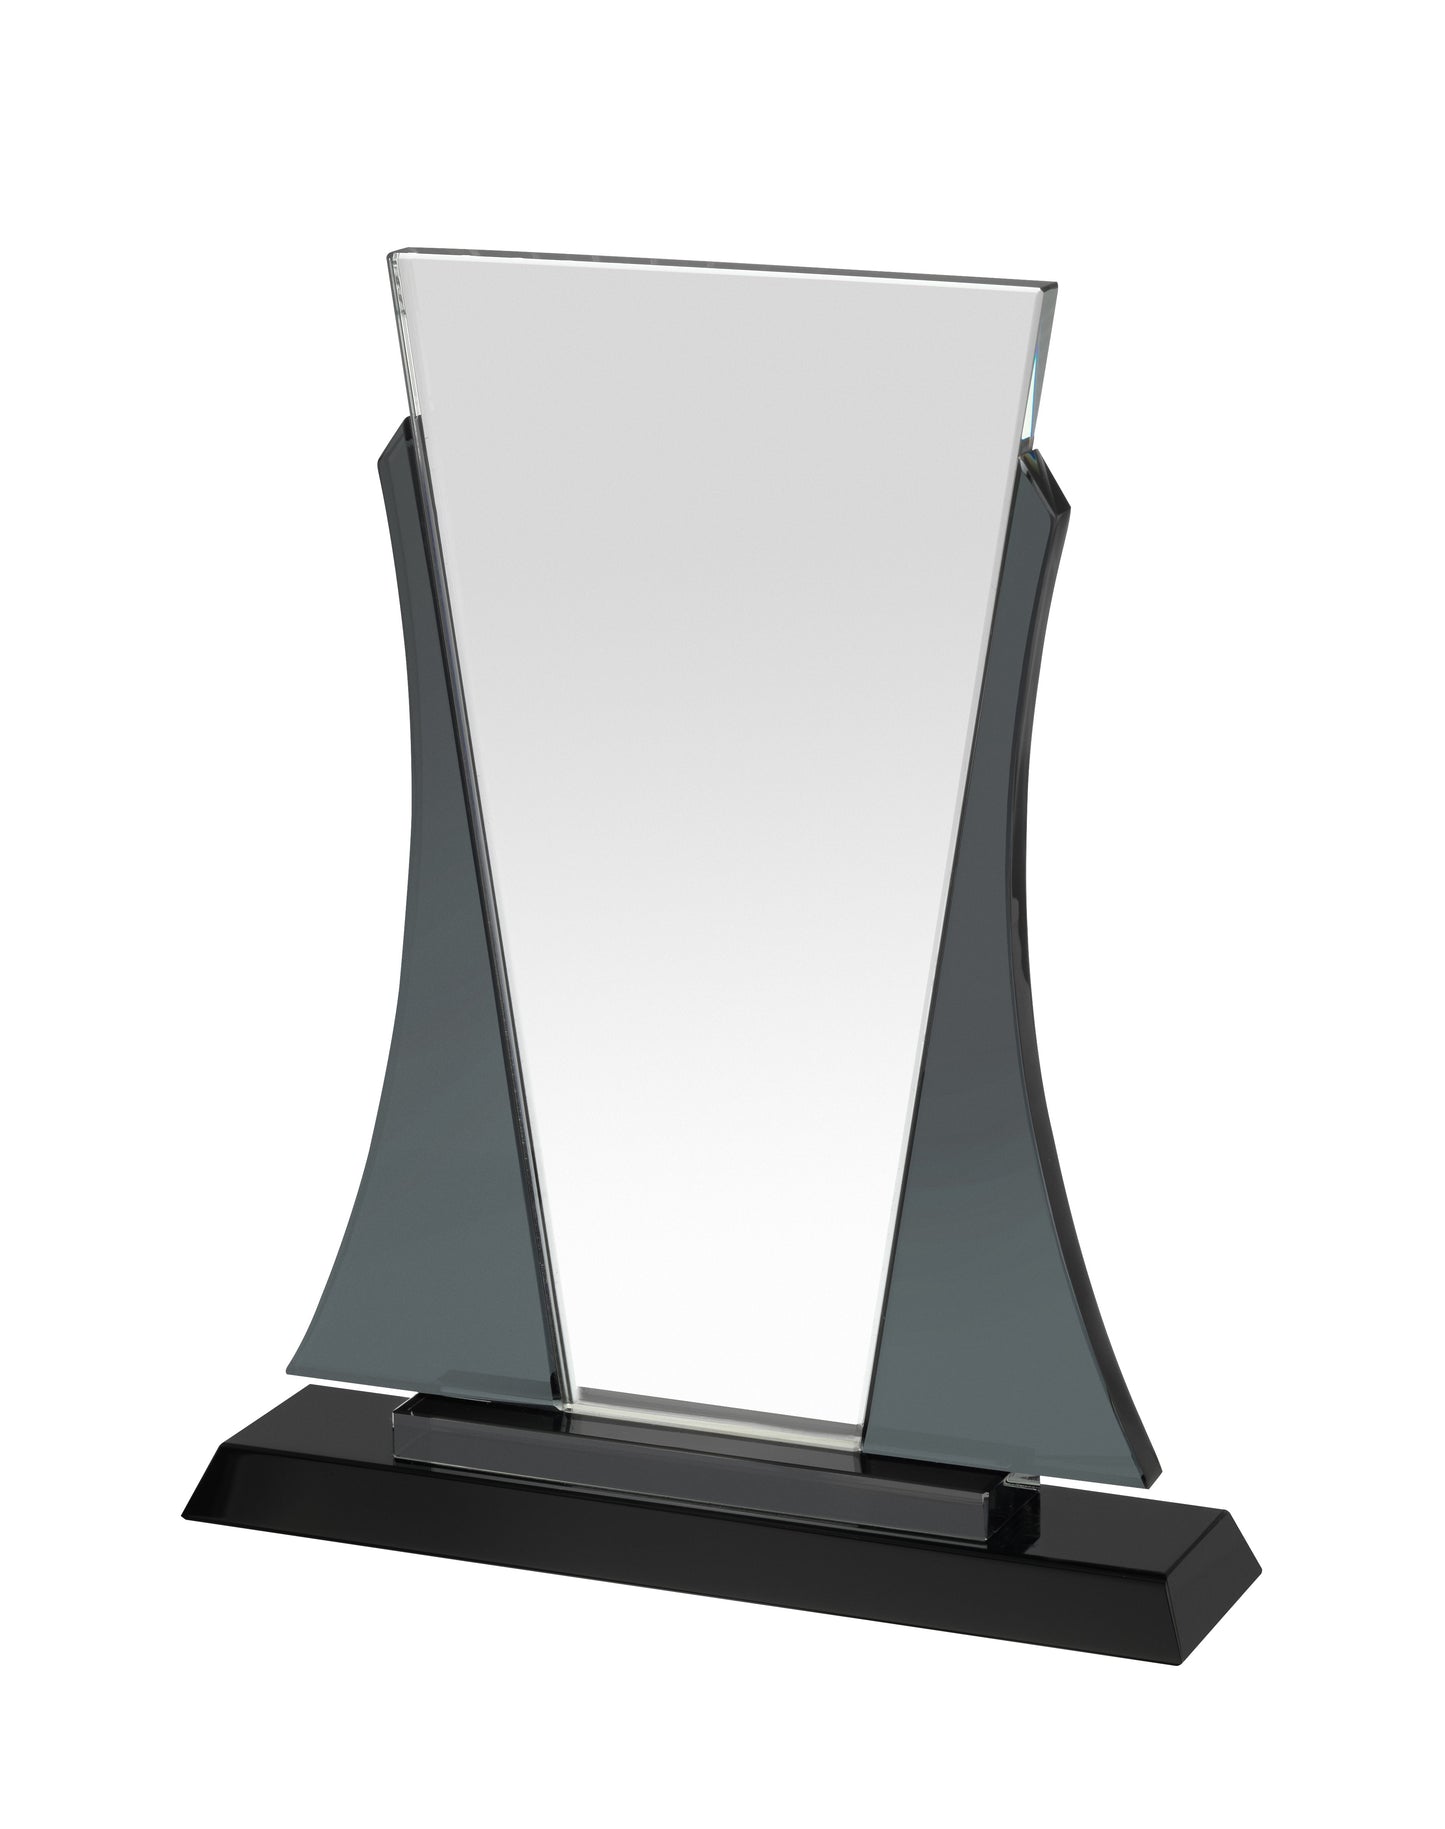 Crystal Award in Box